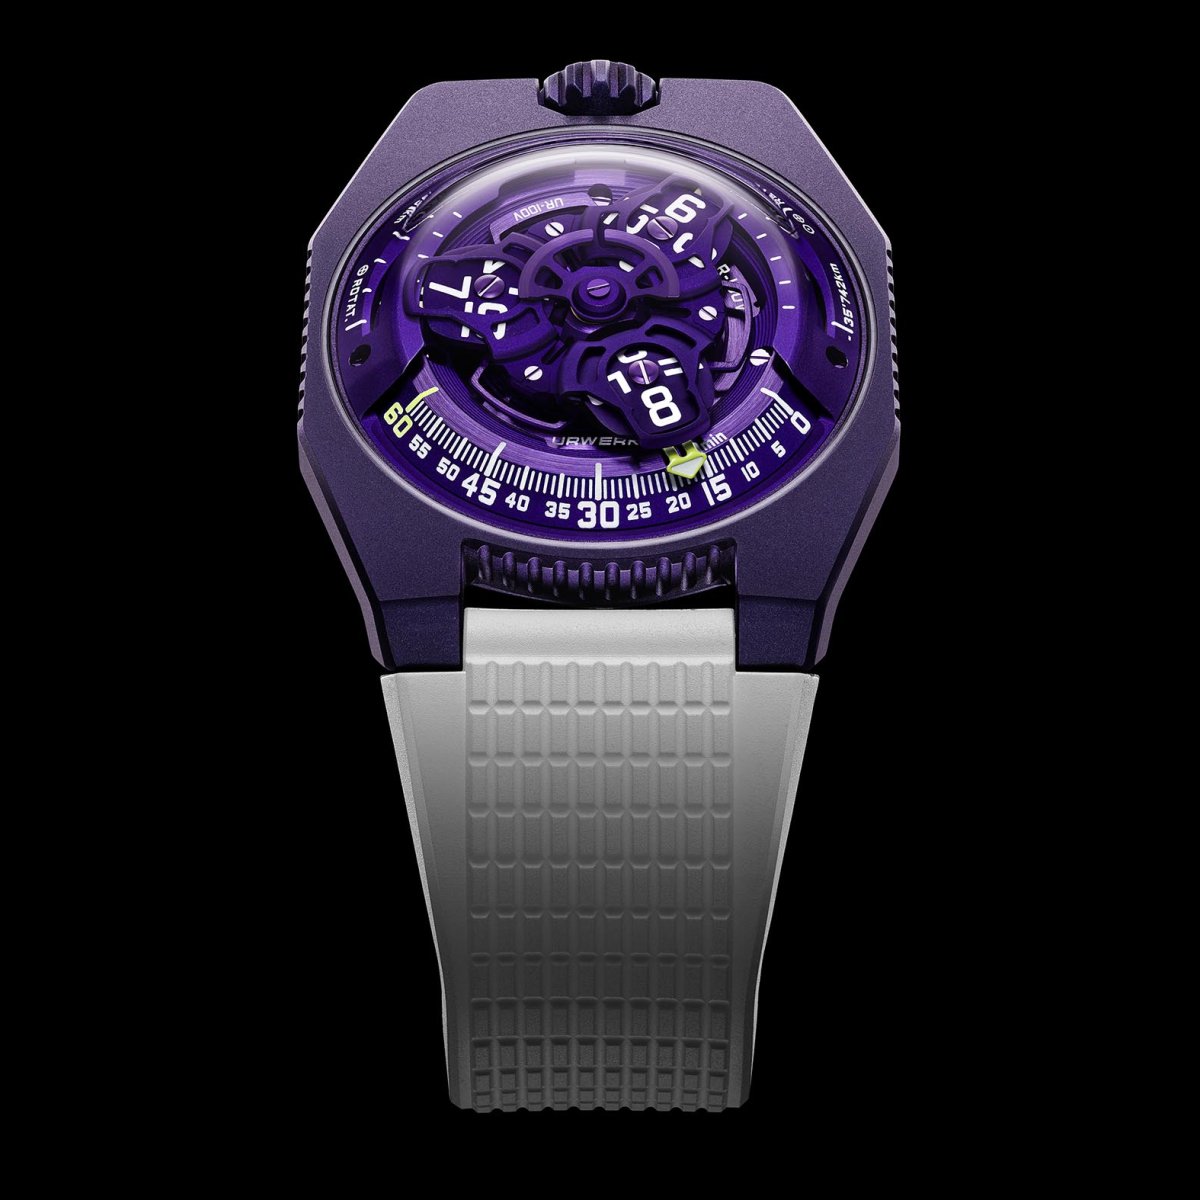 Masculine Men's Watch Luxury Ultra-thin Watch Men Steel Mesh Belt Fashion  Watch at Rs 918.99 | Wrist Watch | ID: 2851552910988